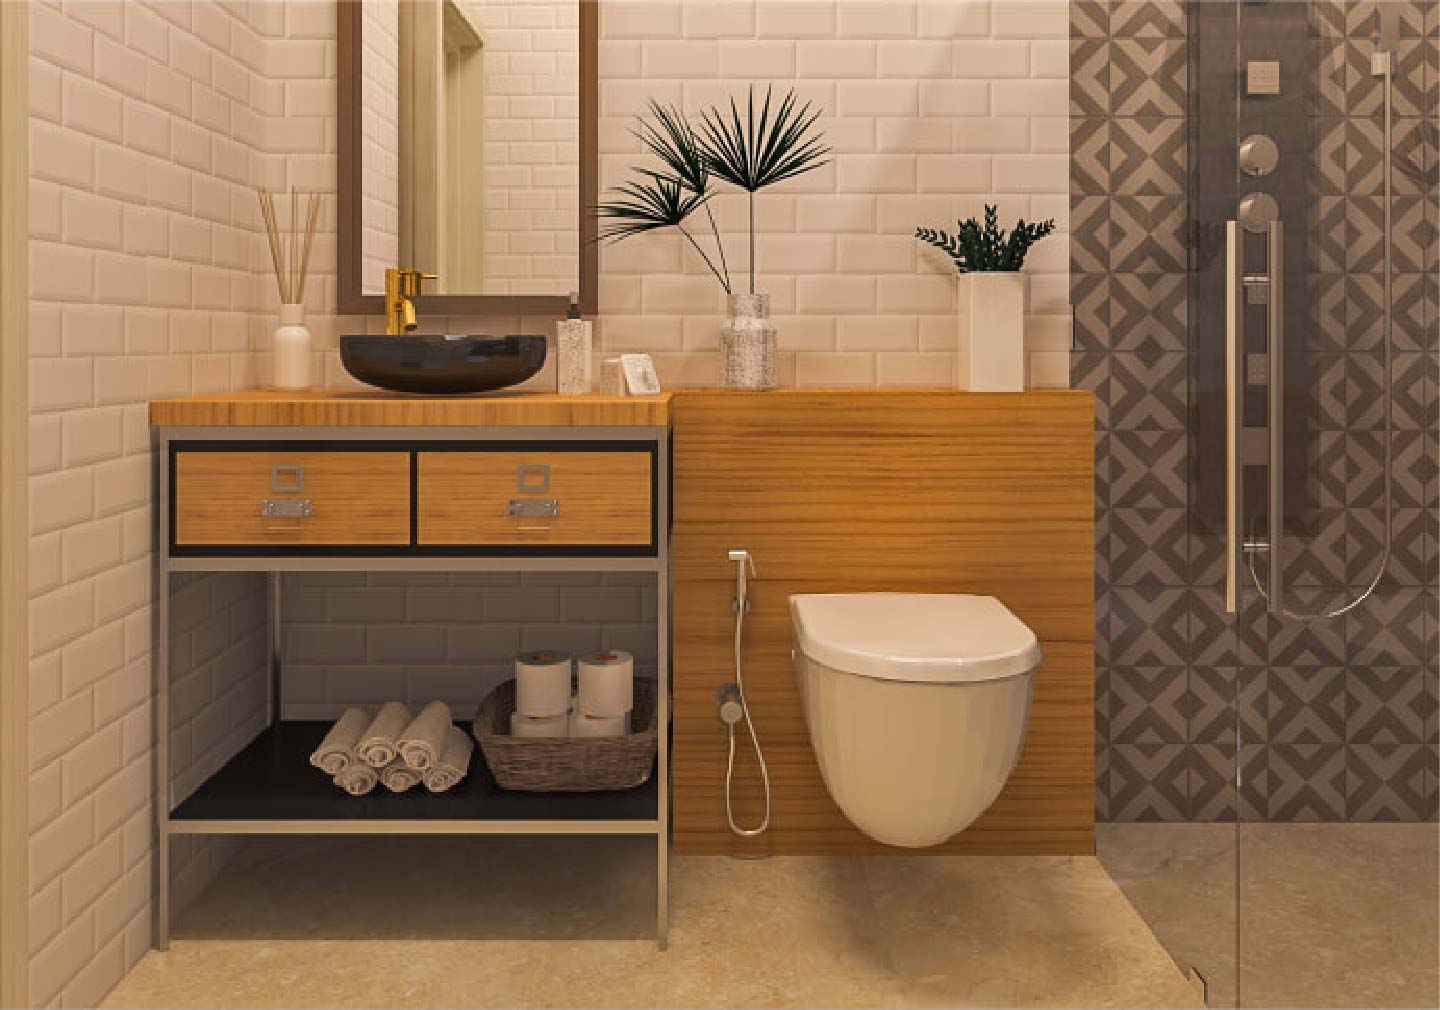 The Wooden Look - Bathroom Interior Design